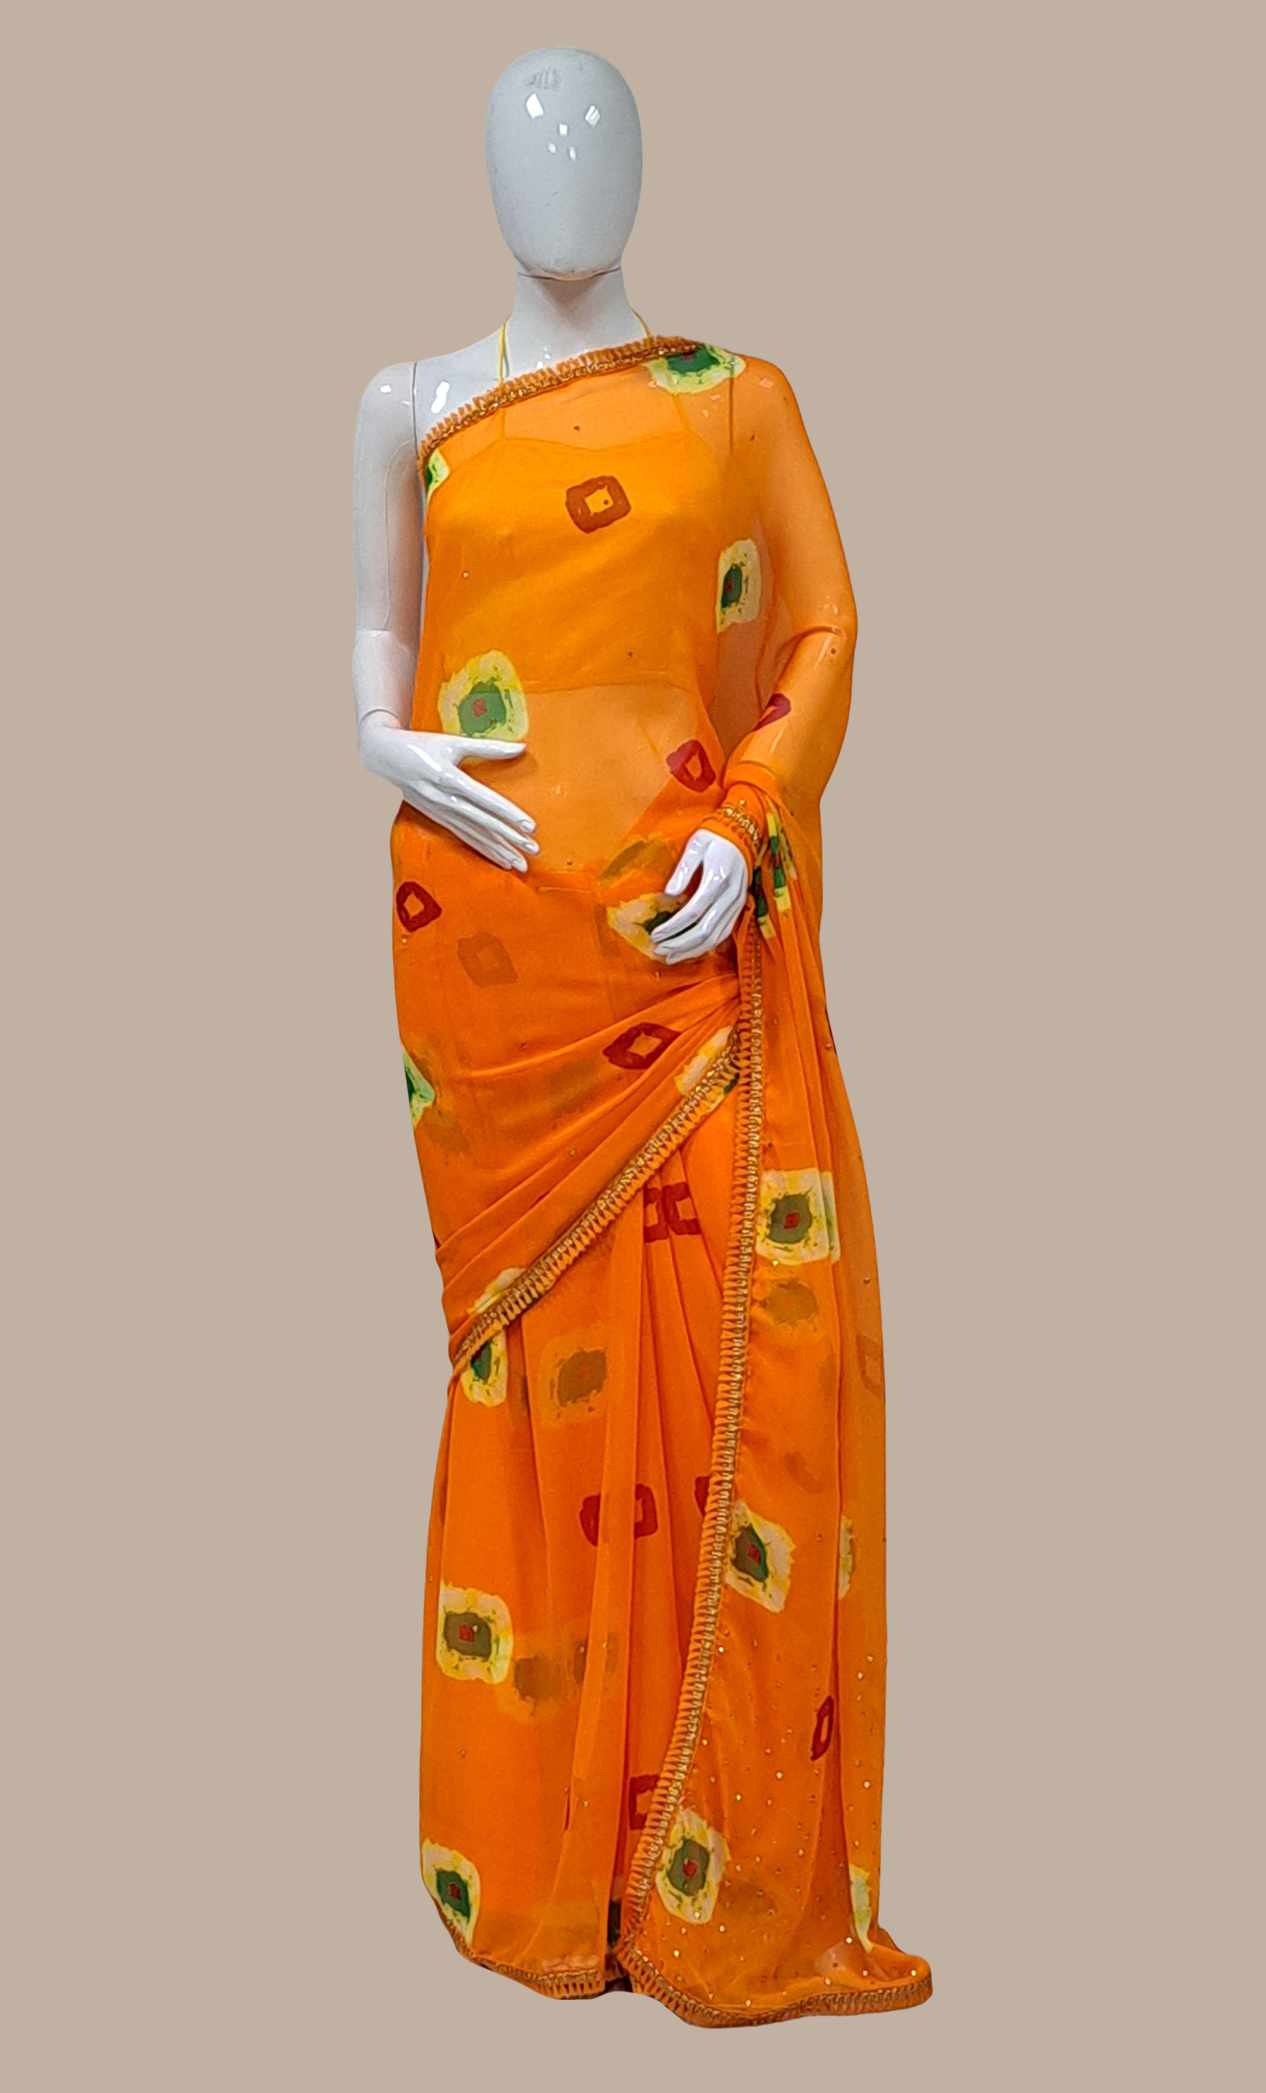 Egg Yellow Bandhani Printed Sari